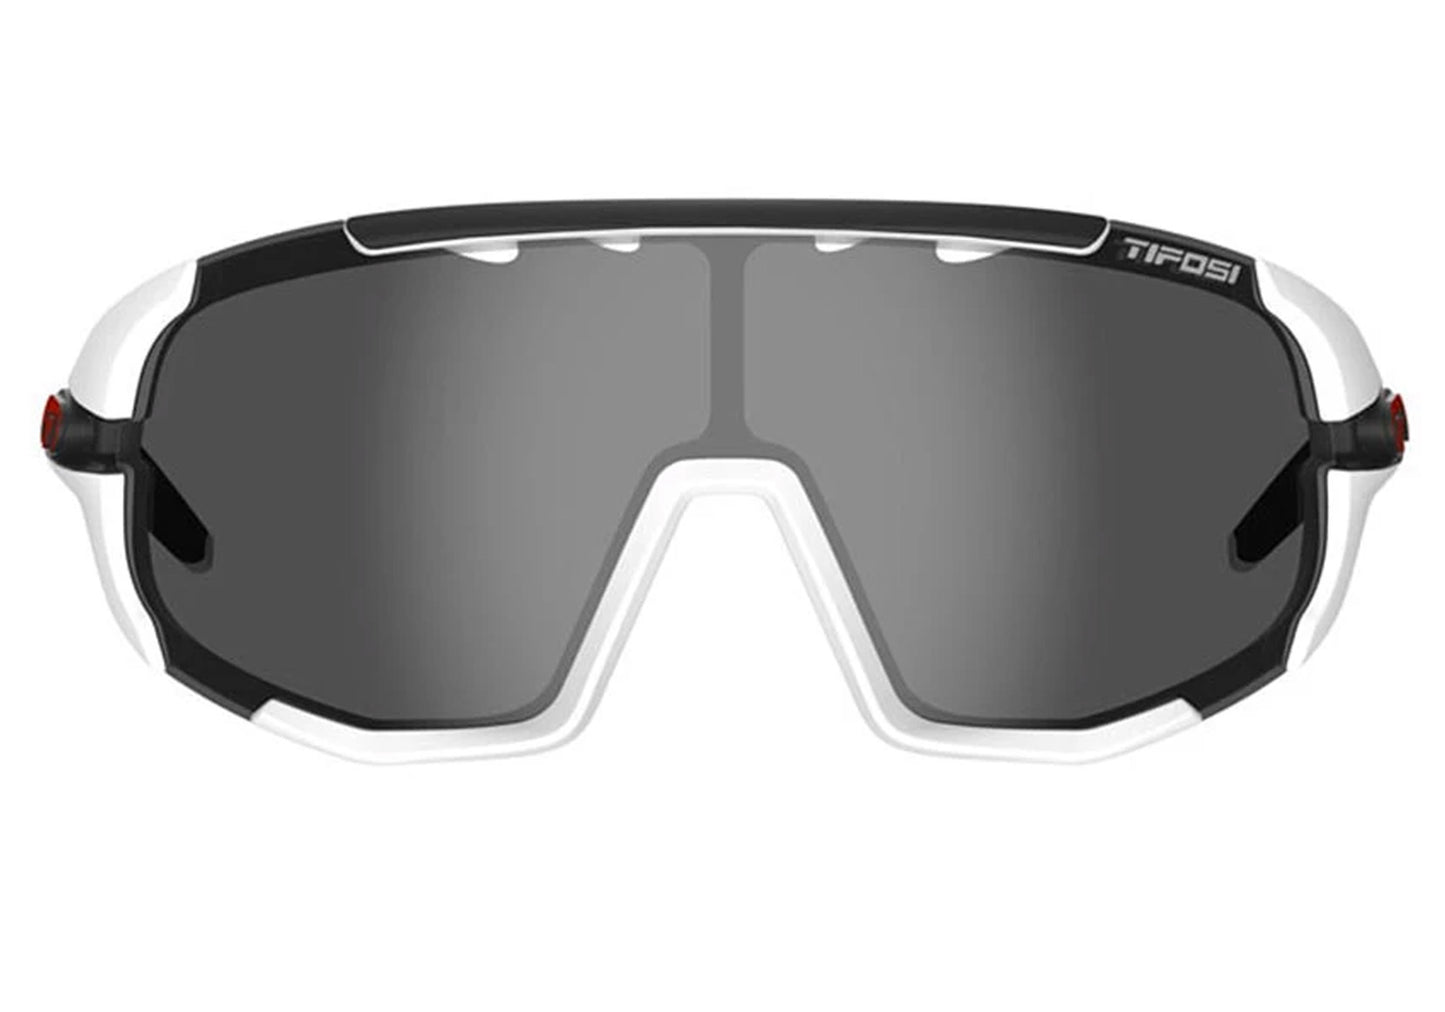 Tifosi Sledge Matte White Sunglasses With 3 Interchangeable Lenses